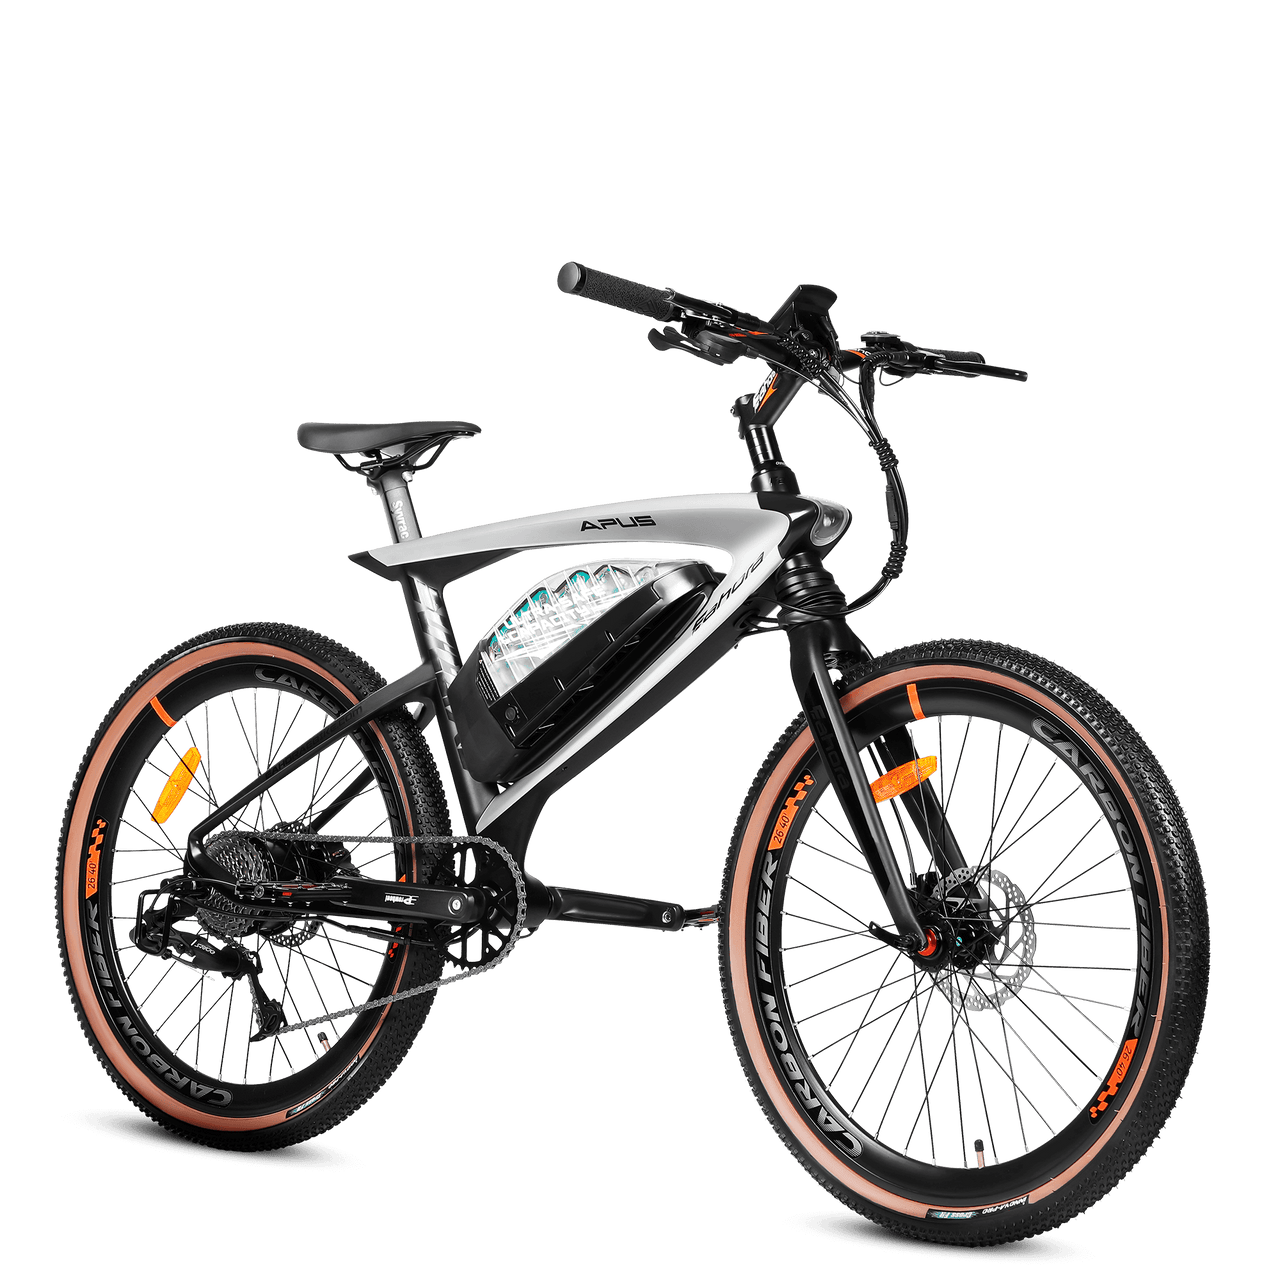 500W Road Electric Bike | Carbon Fiber eBike | Eahora APUS (Limited Edition)